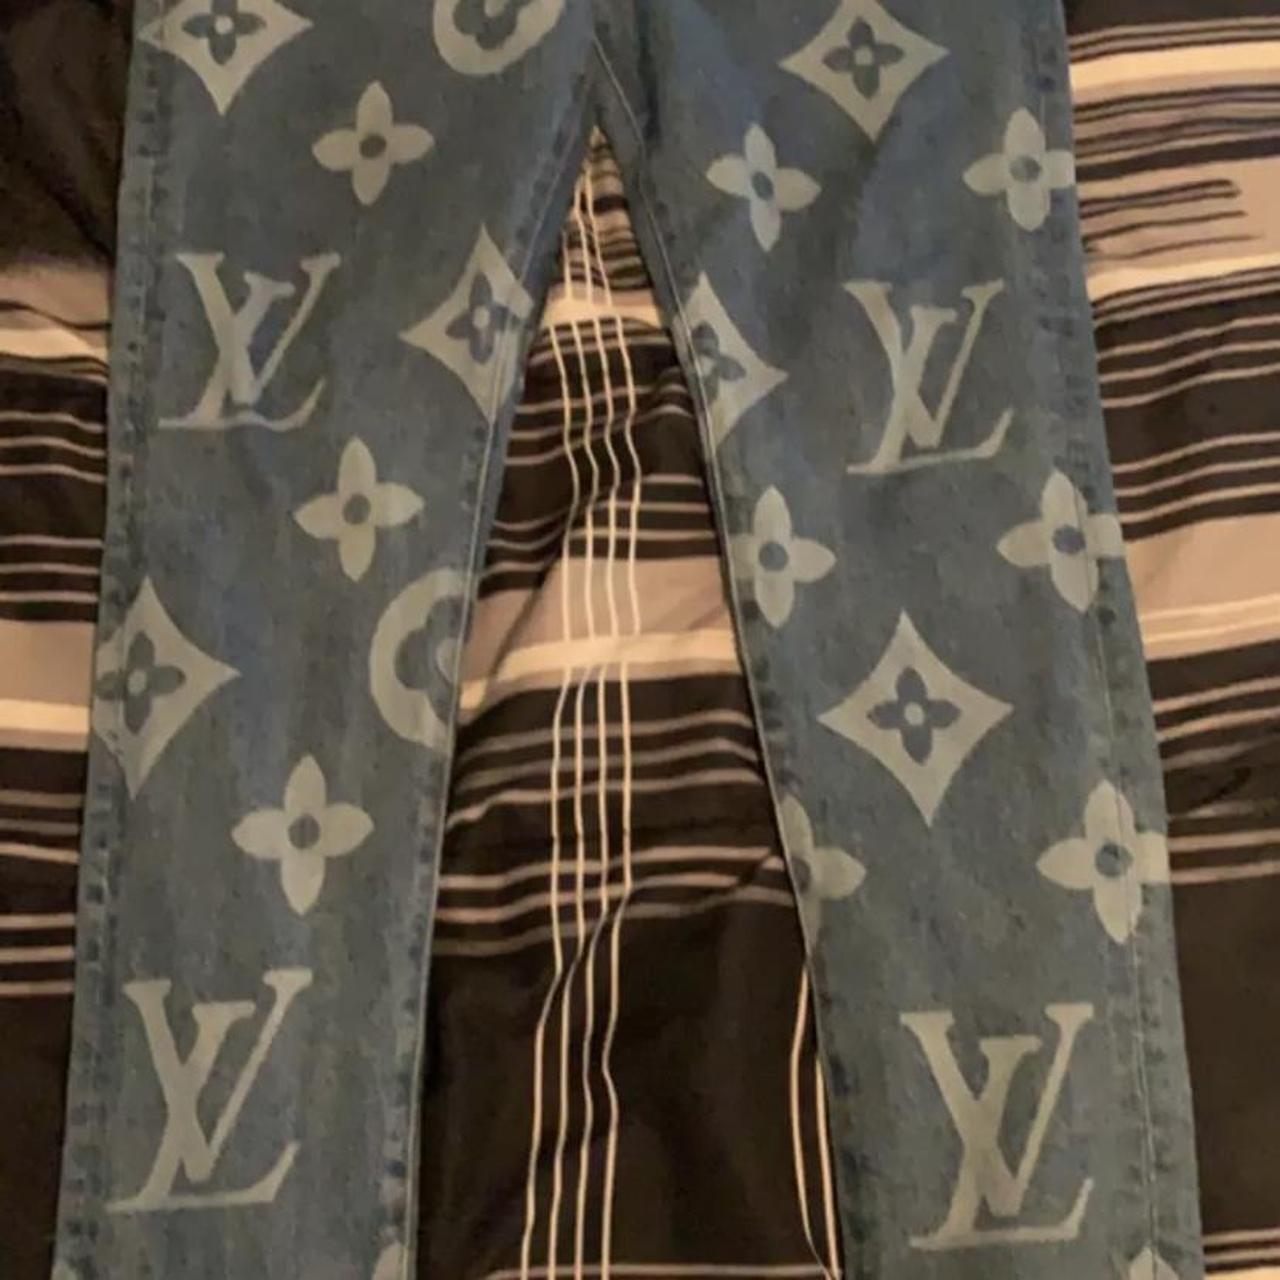 Louis Vuitton Jeans(thrifted). brand new. - Depop